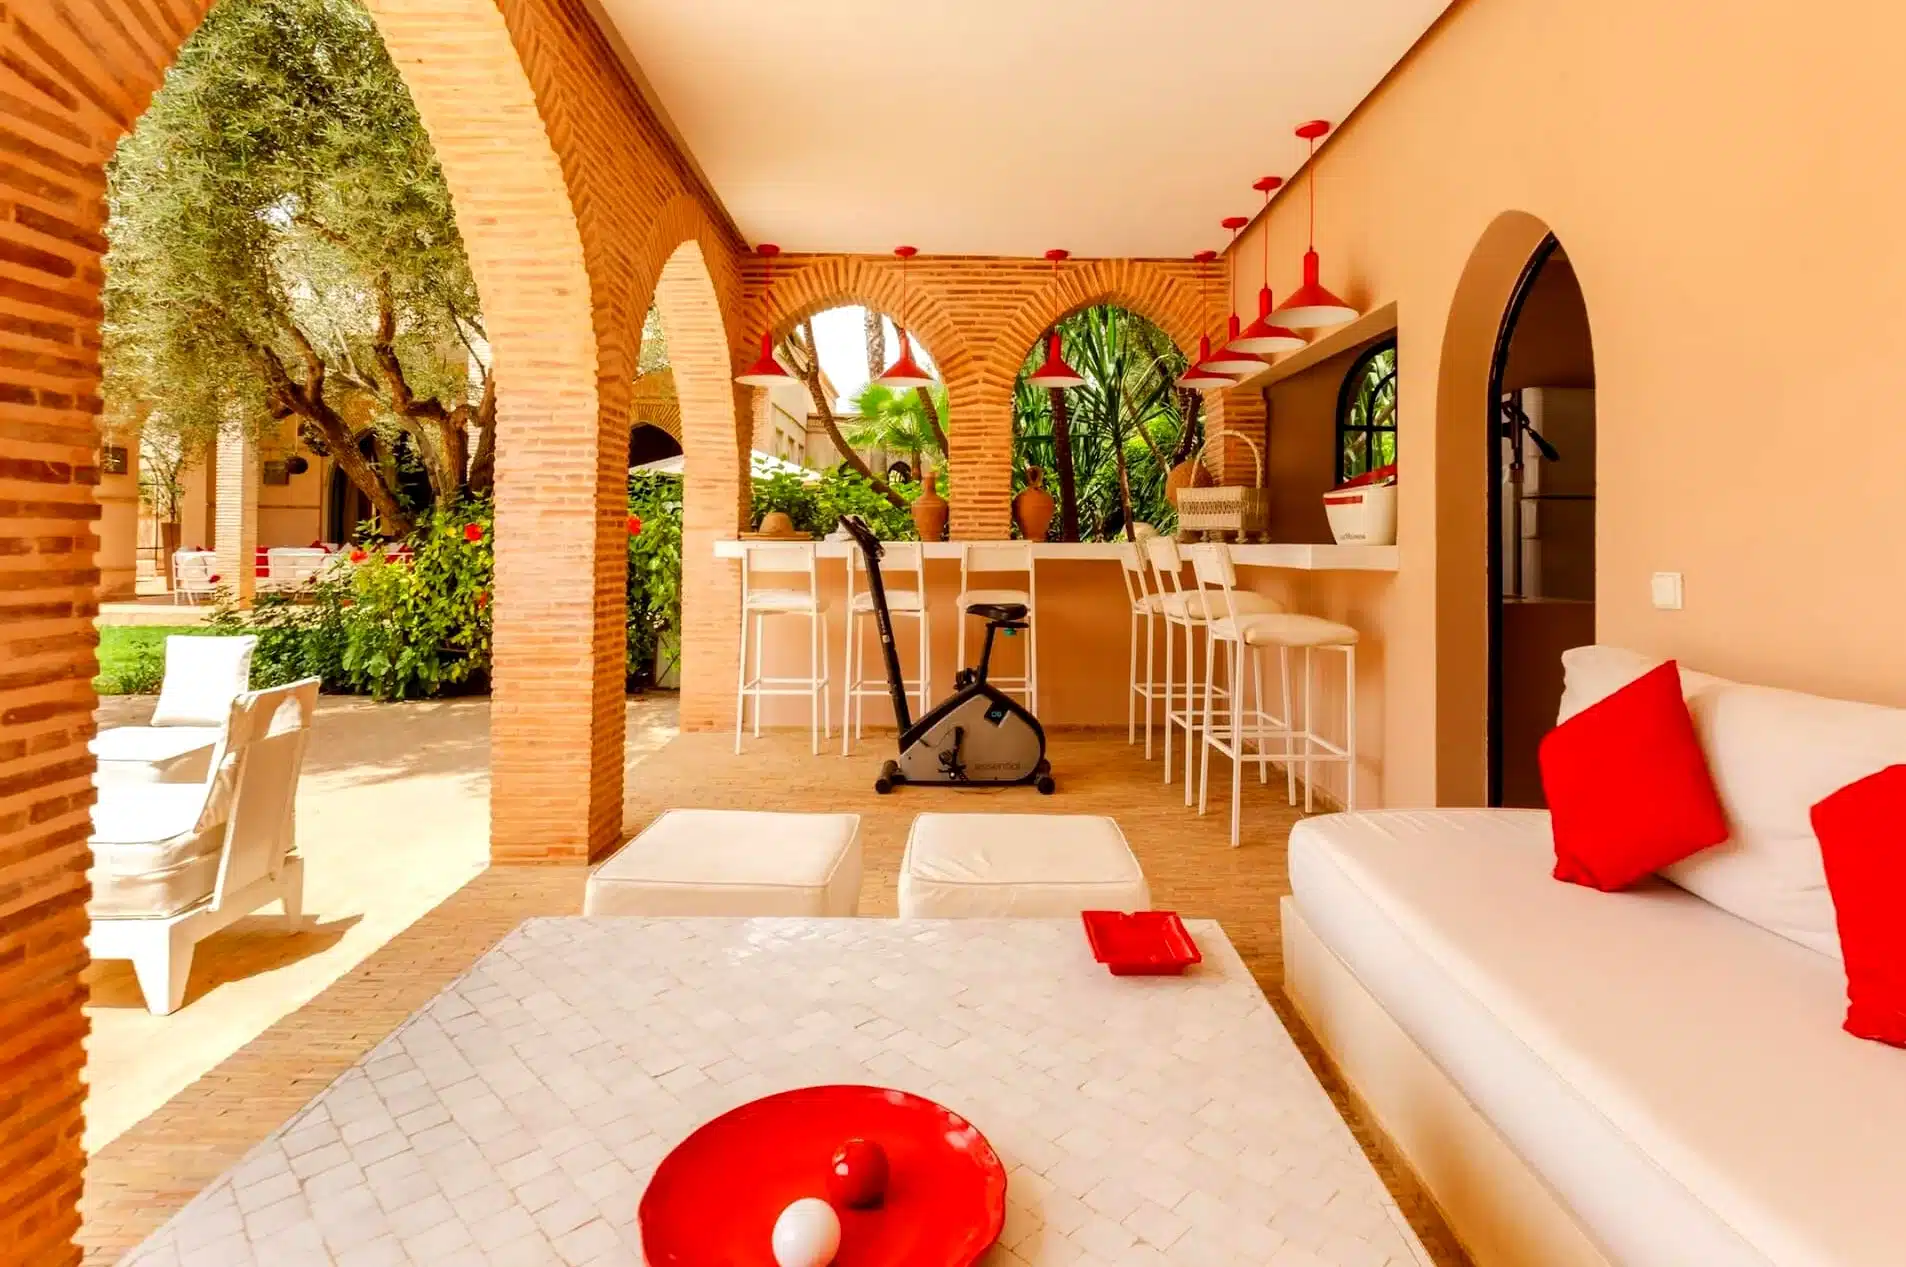 Patio at Luxury Marrakesh Villa, fundraiser auction items, live auction items